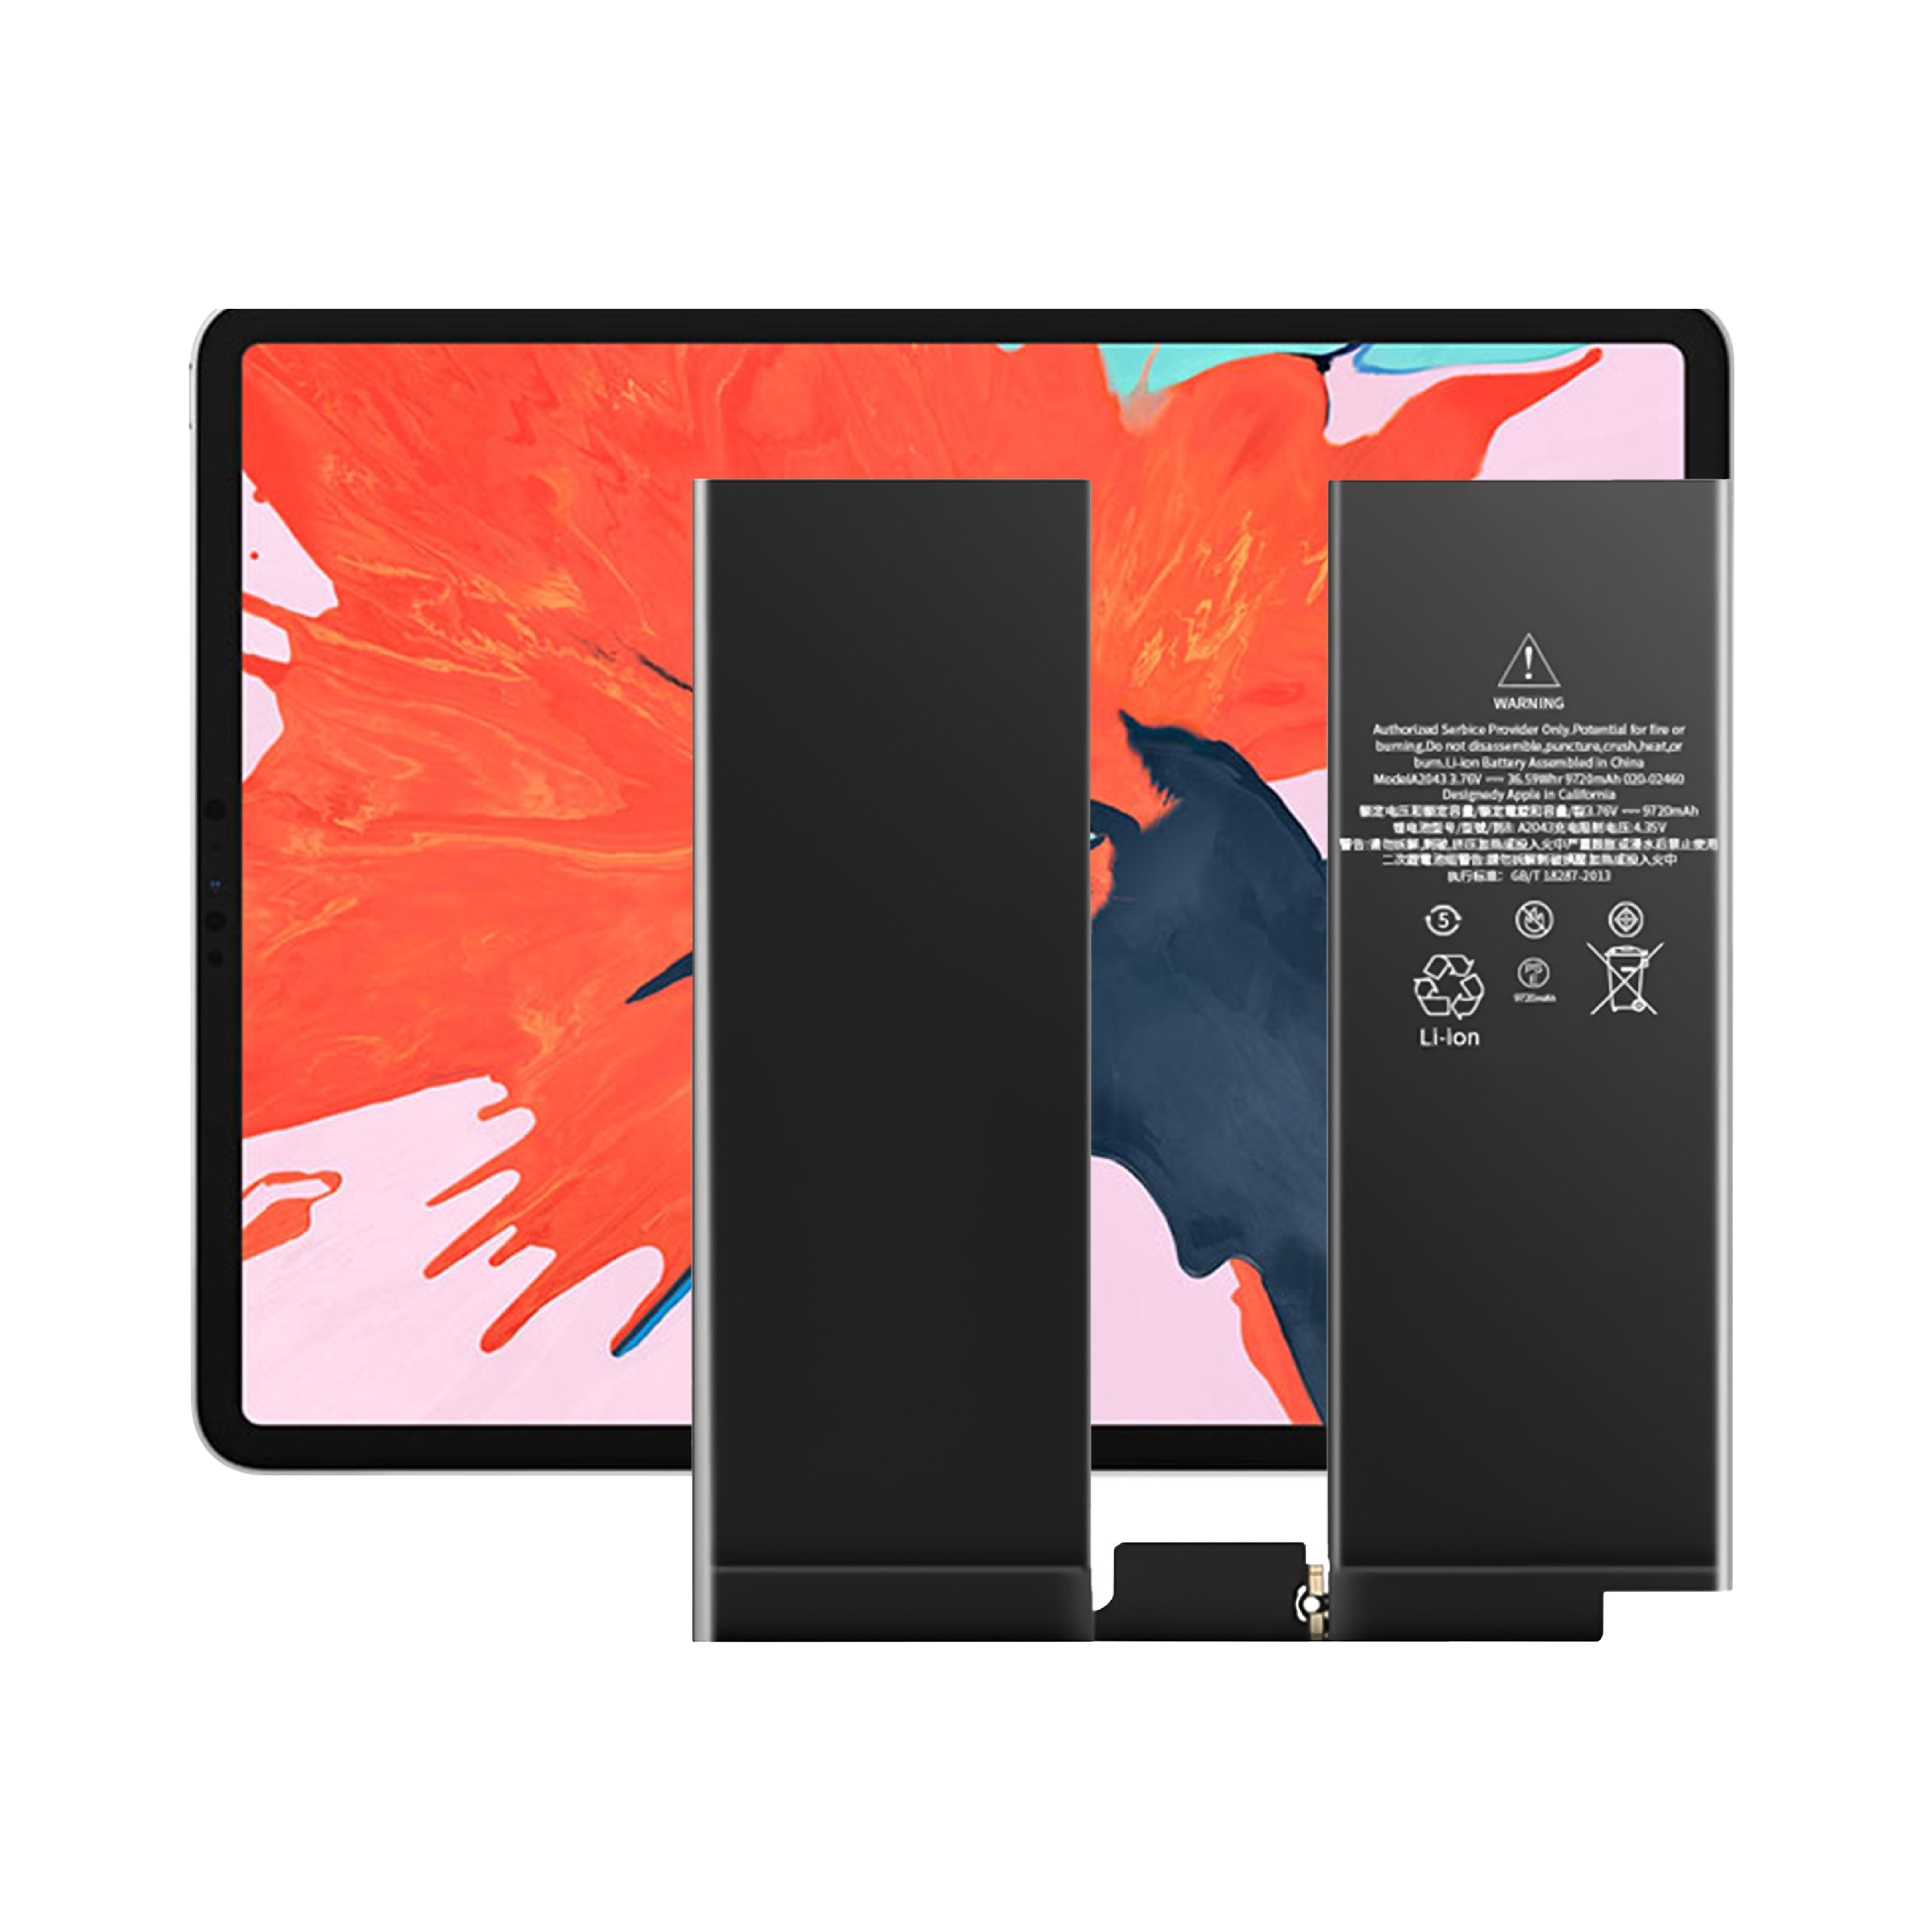 Batteria interna per tablet a 0 cicli nuovissima OEM di alta qualità per batteria Apple iPad Pro 12.9 3a 4a generazione